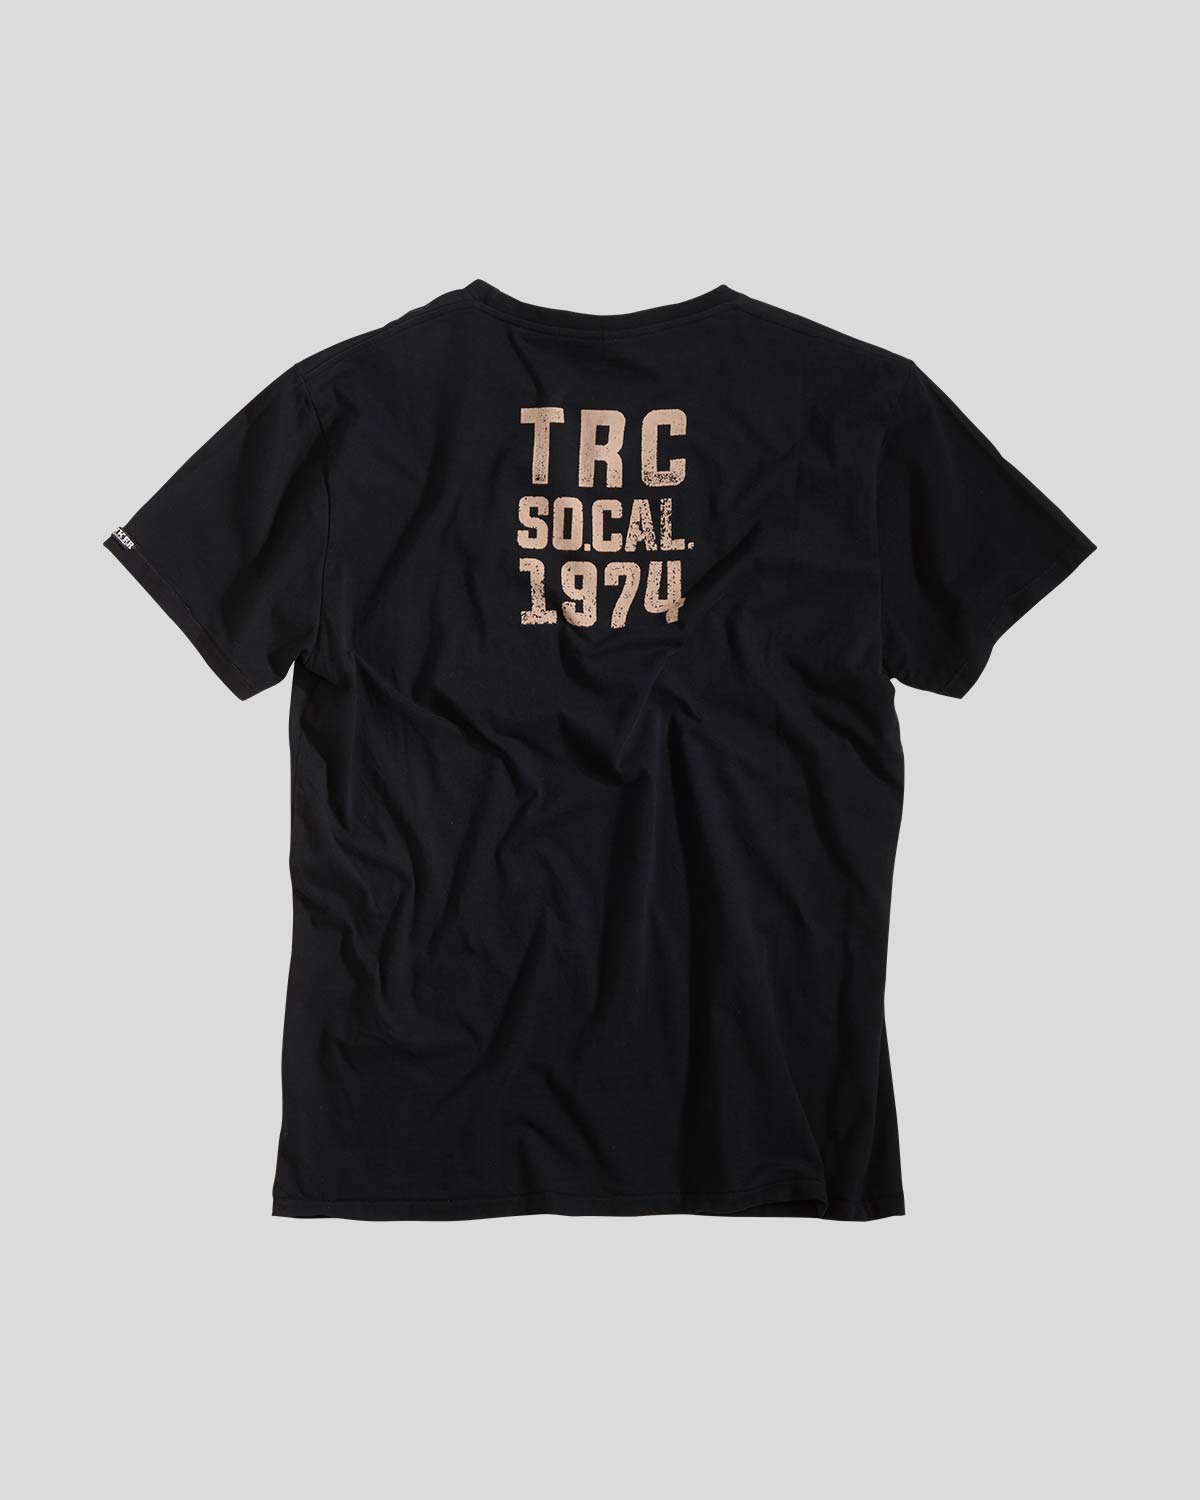 Trc Team T-Shirt Men Black